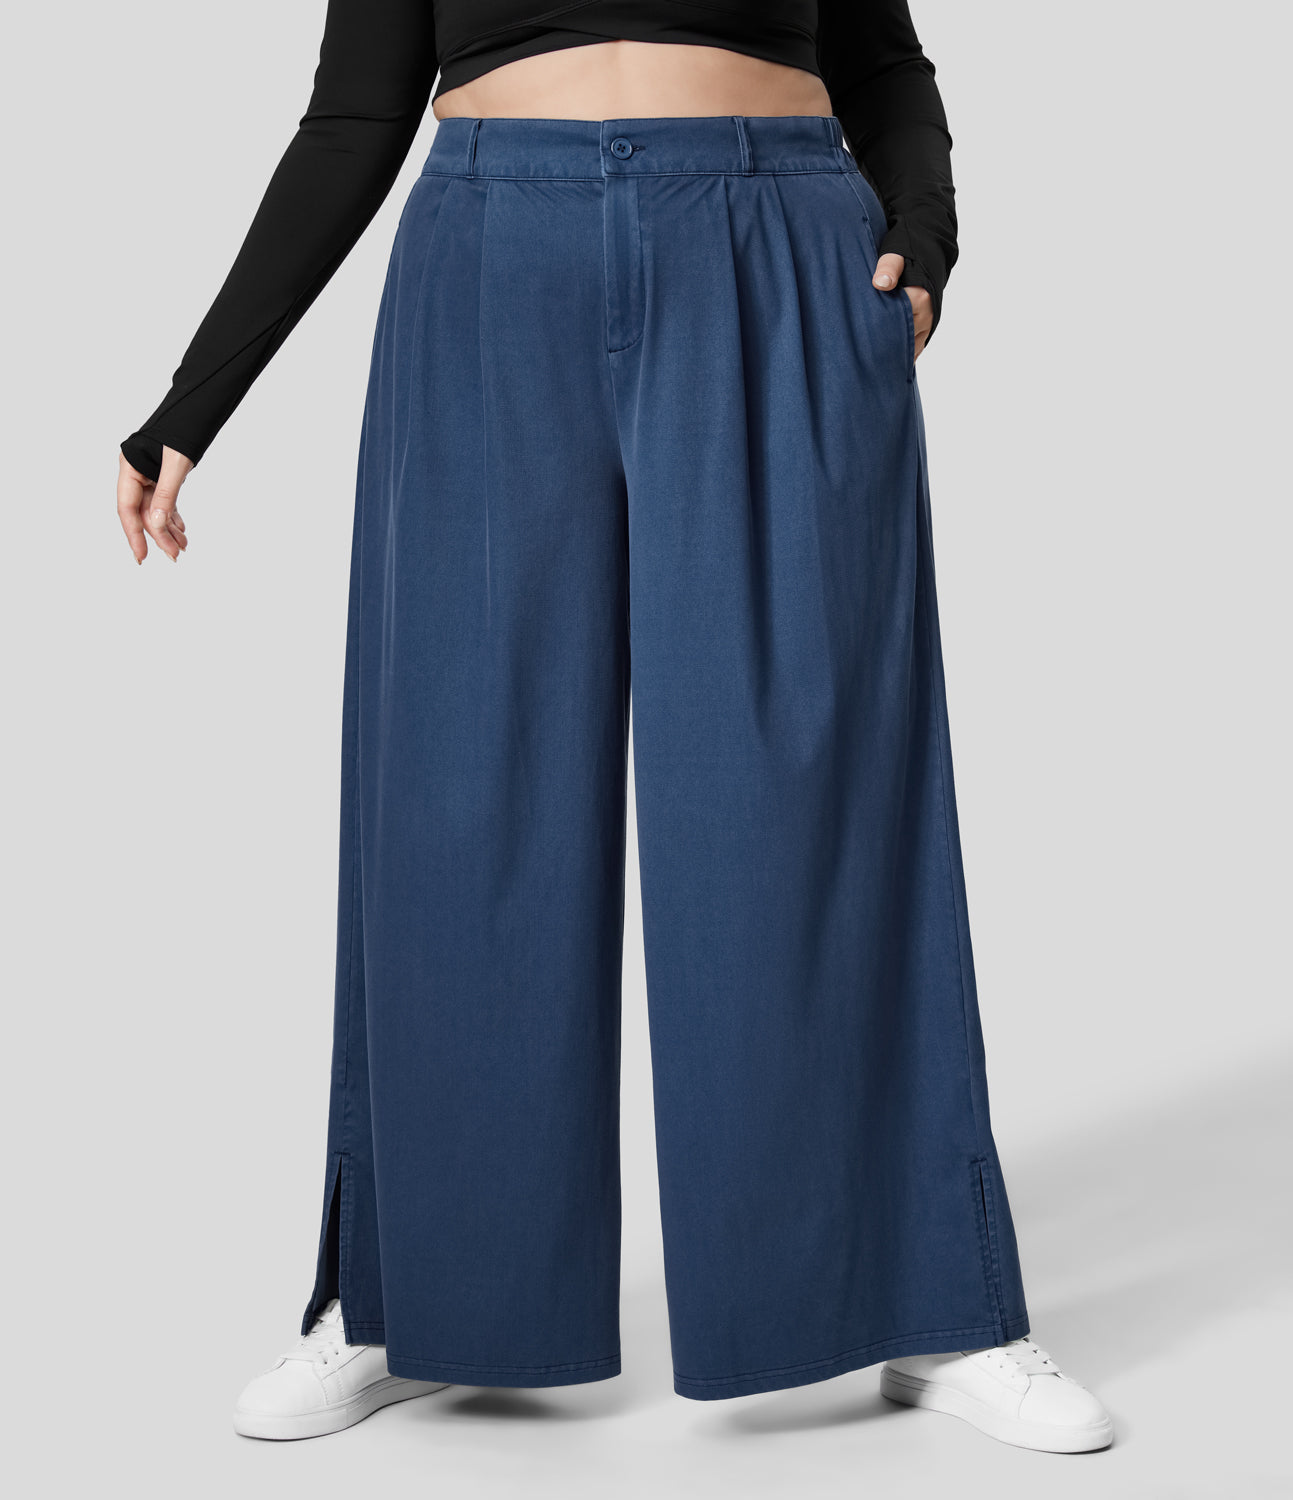 10% Discount! Halara High Waisted Button Zipper Plicated Side Pocket Split  Hem Wide Leg Casual Plus Size Pants - Indigo Blue Denim - 2X(regular) Halara.  Global